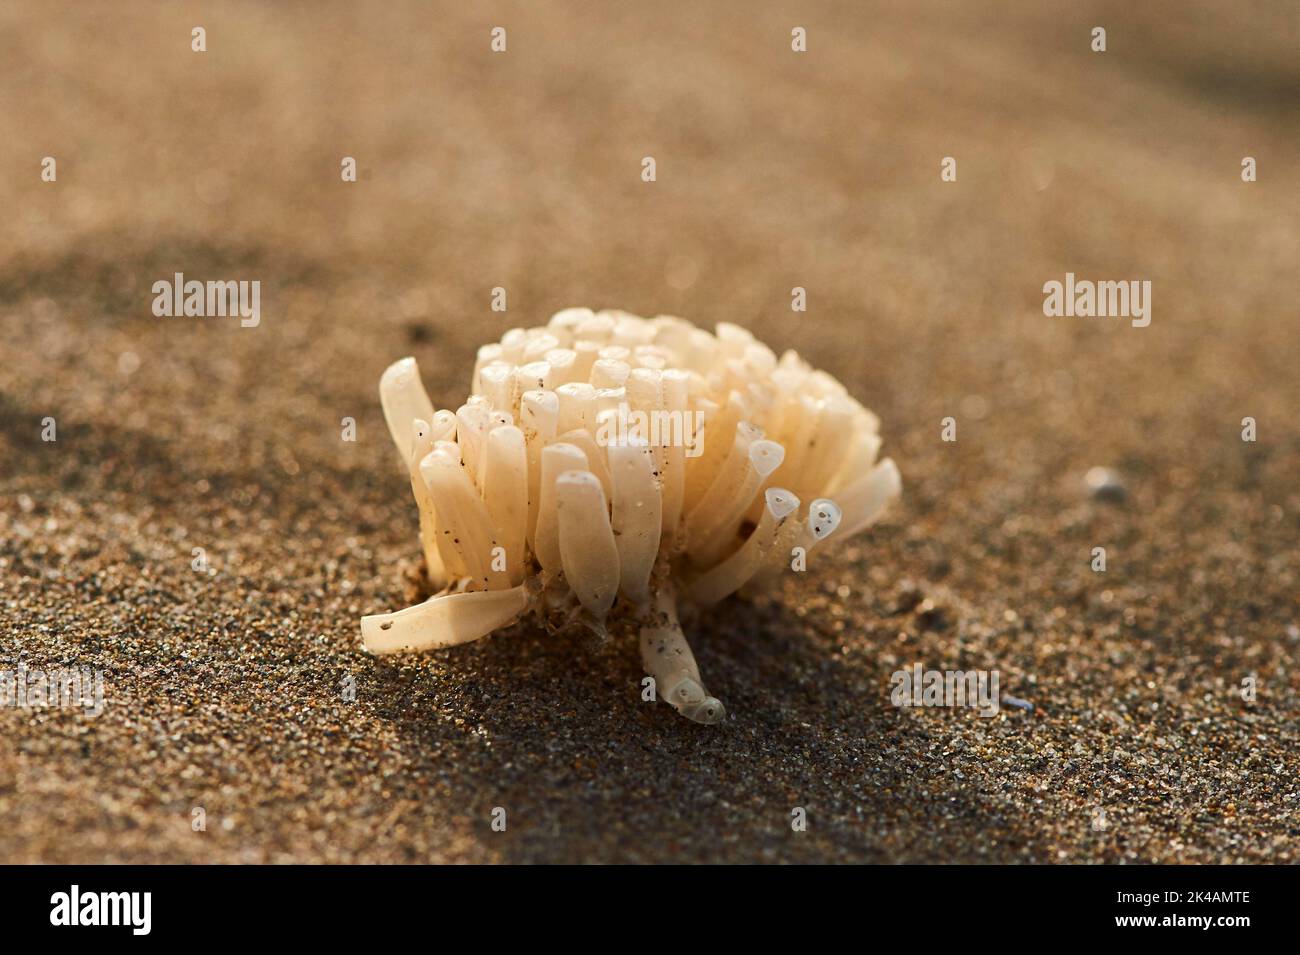 Washed up sea sponge on a beach, ebro delta, Catalonia, Spain Stock Photo